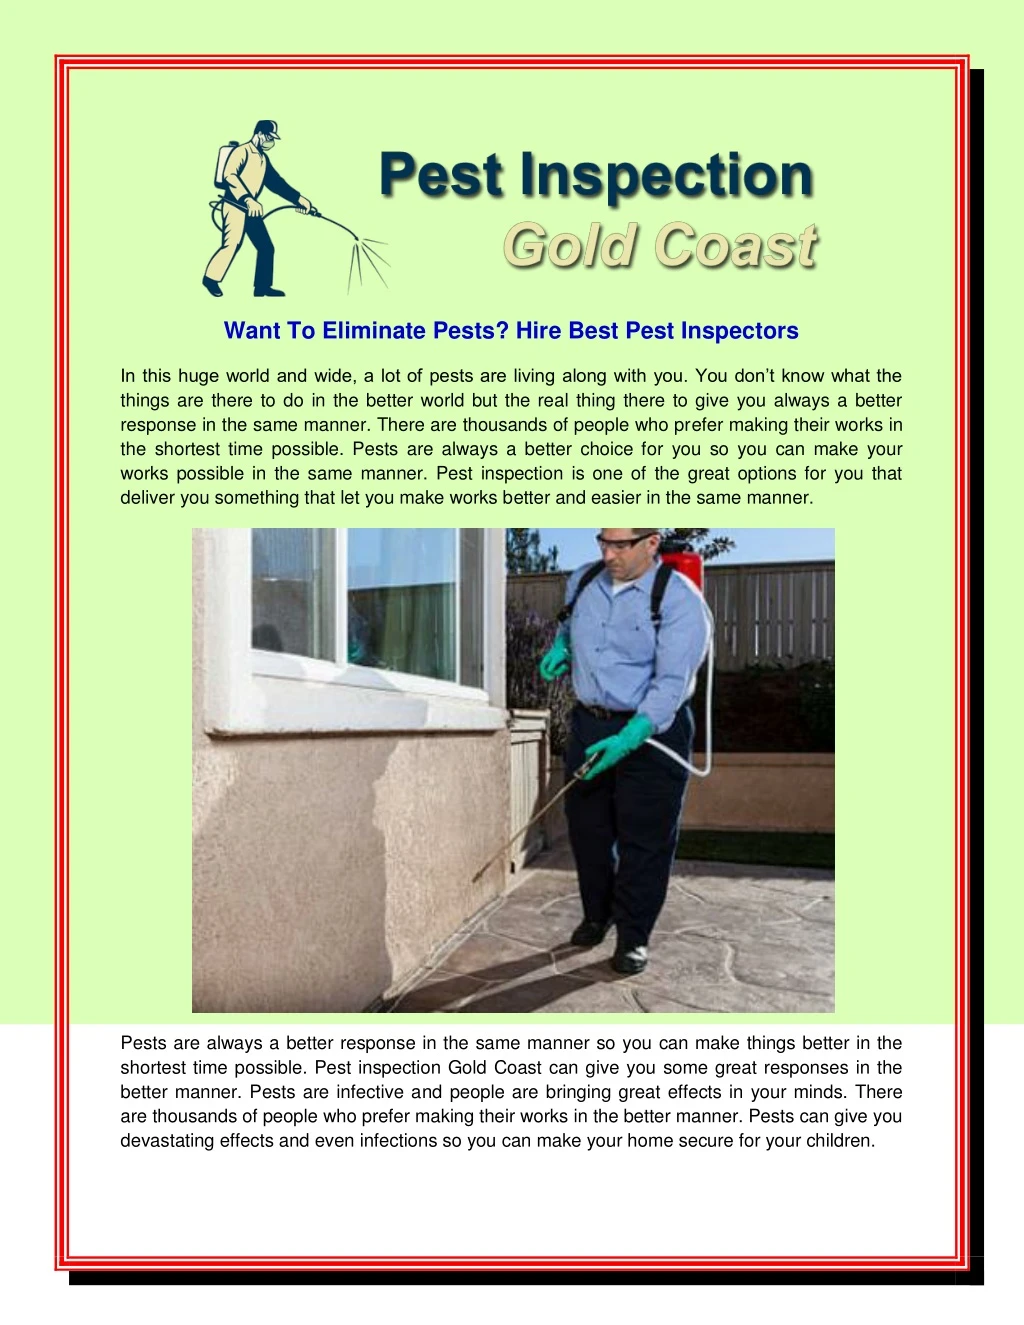 want to eliminate pests hire best pest inspectors